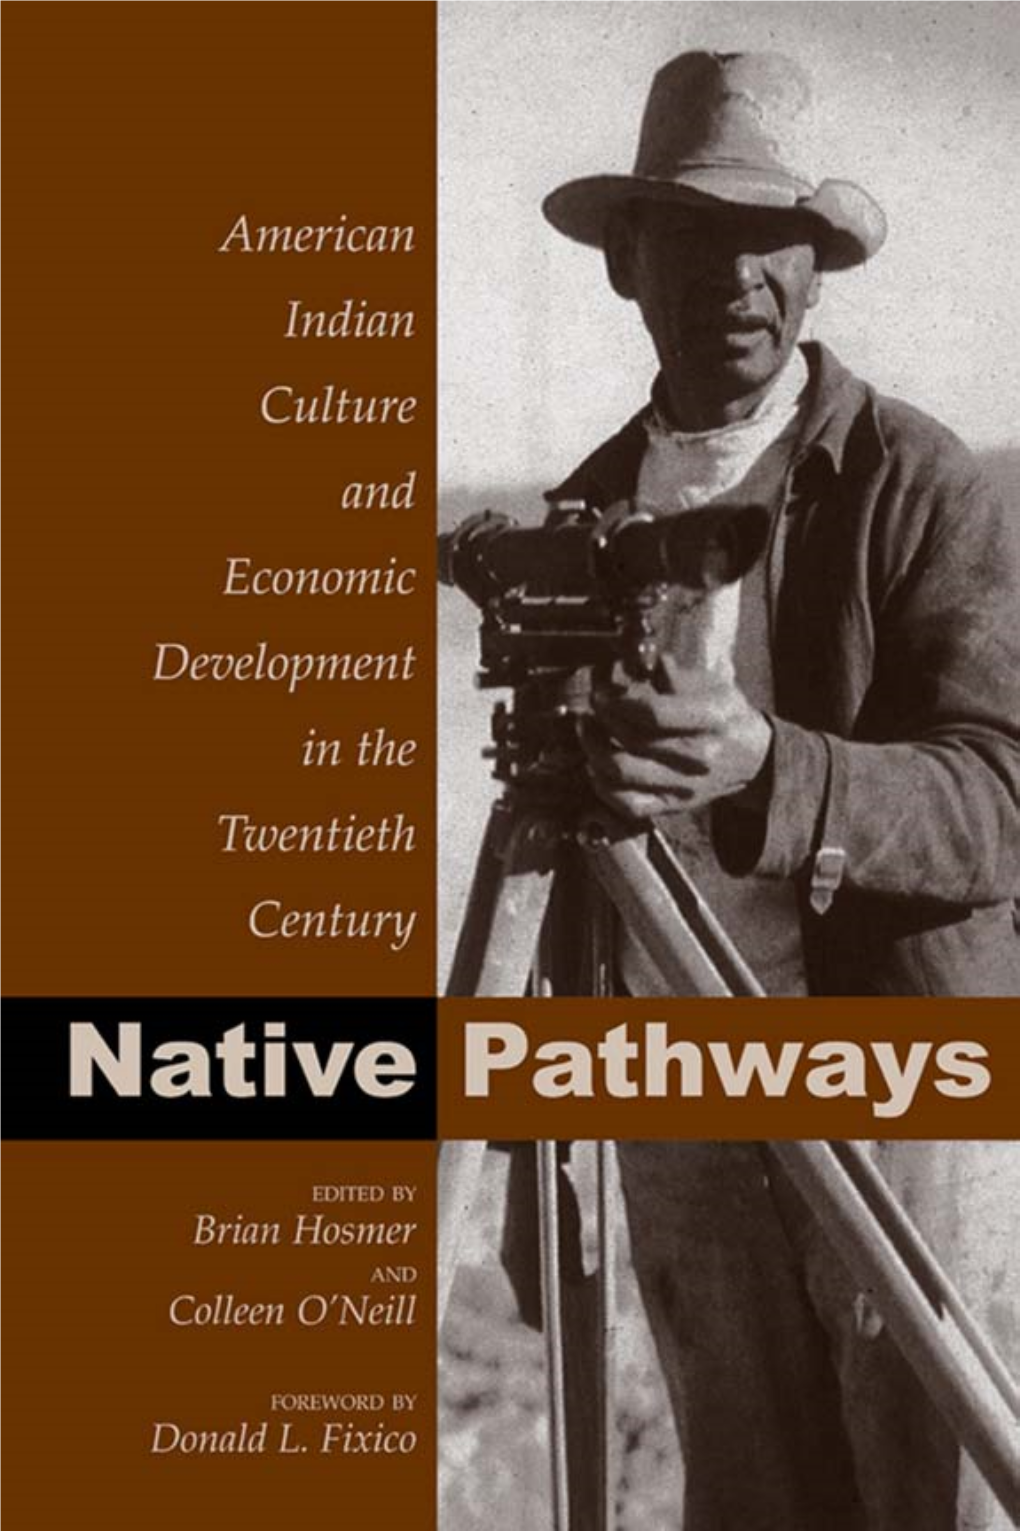 American Indian Culture and Economic Development in the Twentieth Century